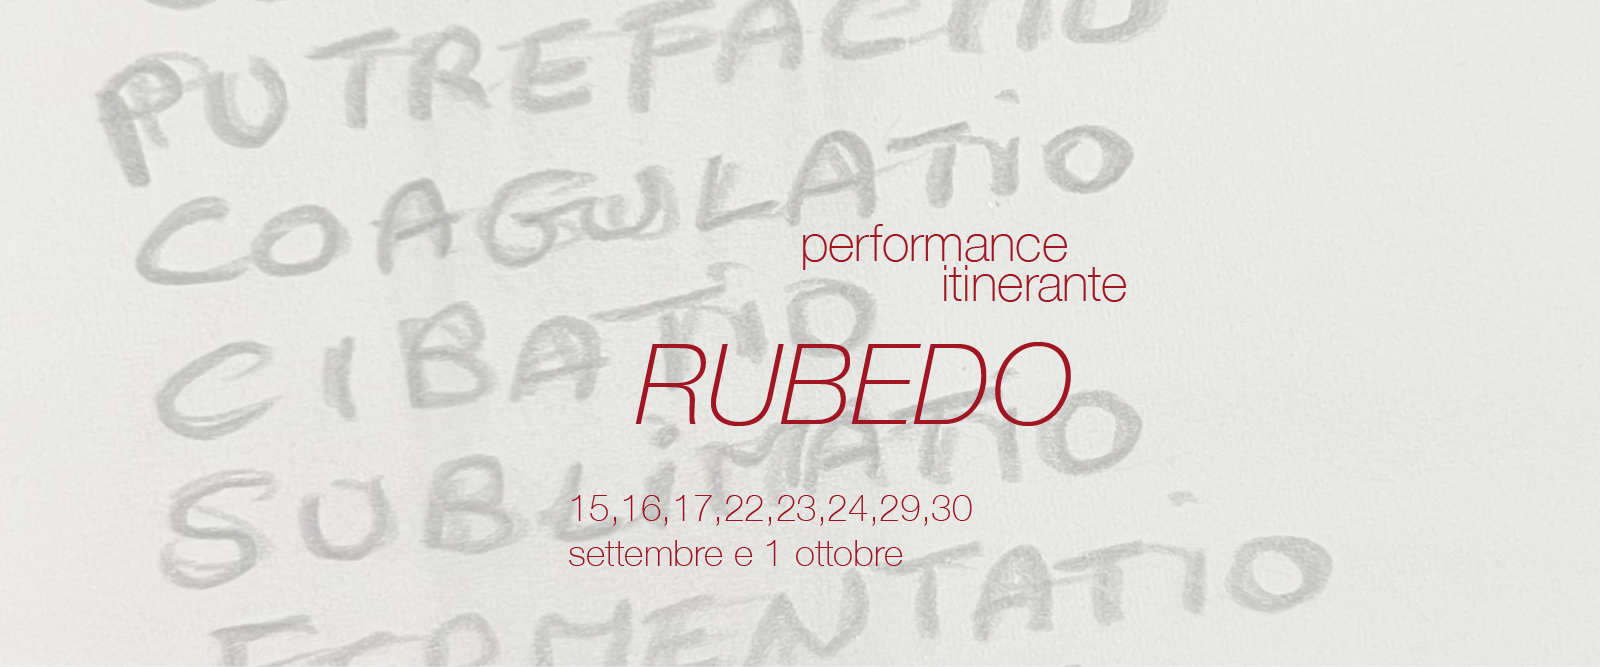 2023 1200x500 Rubedo performance 09 2023 01